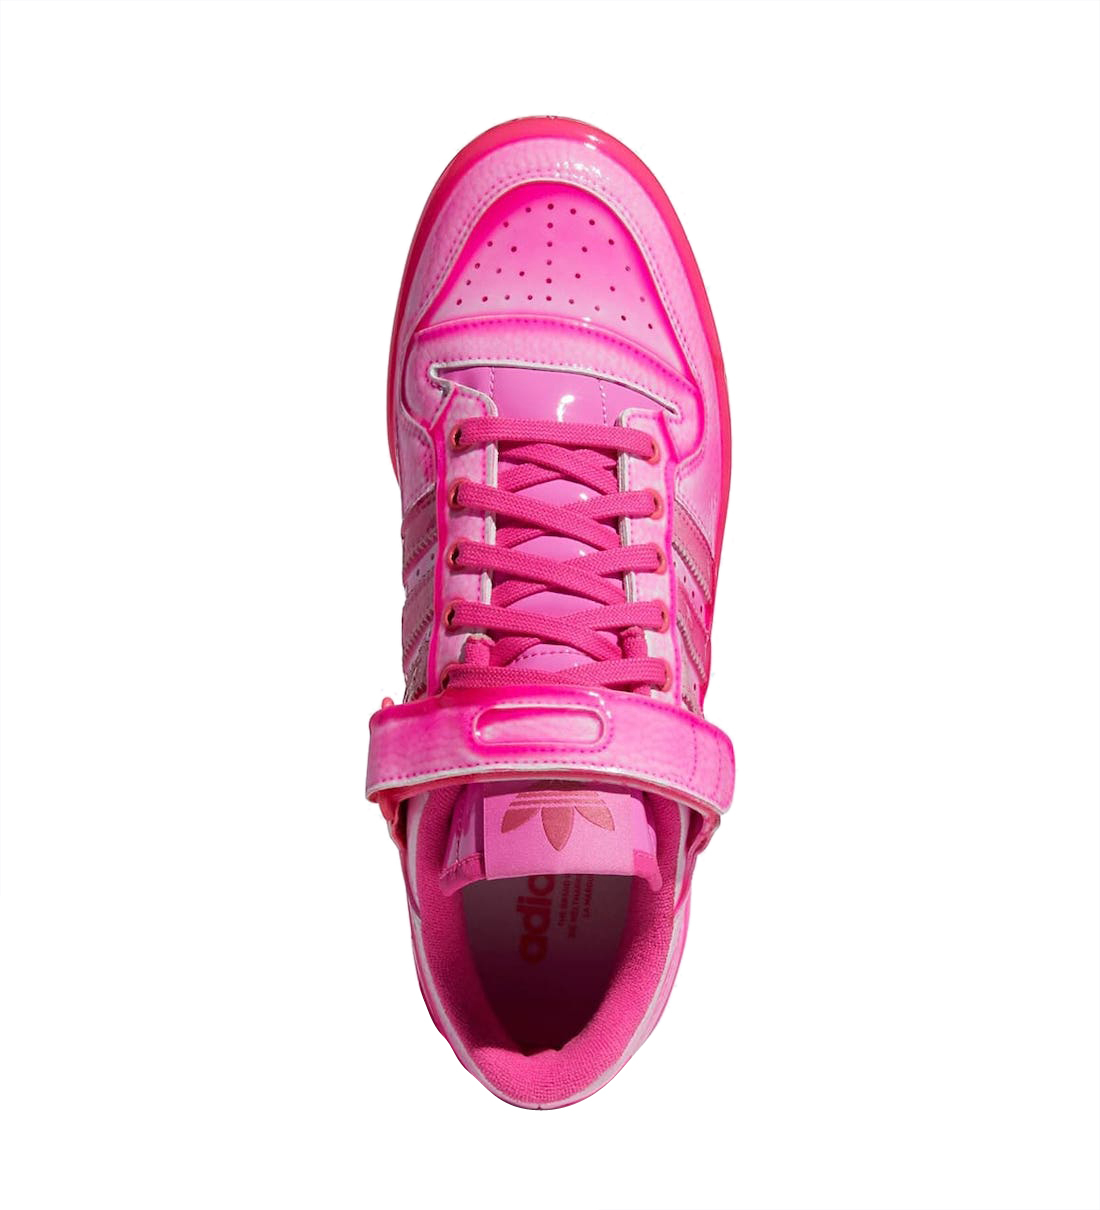 Jeremy Scott x adidas Forum Low Hot Pink GZ8818 - KicksOnFire.com